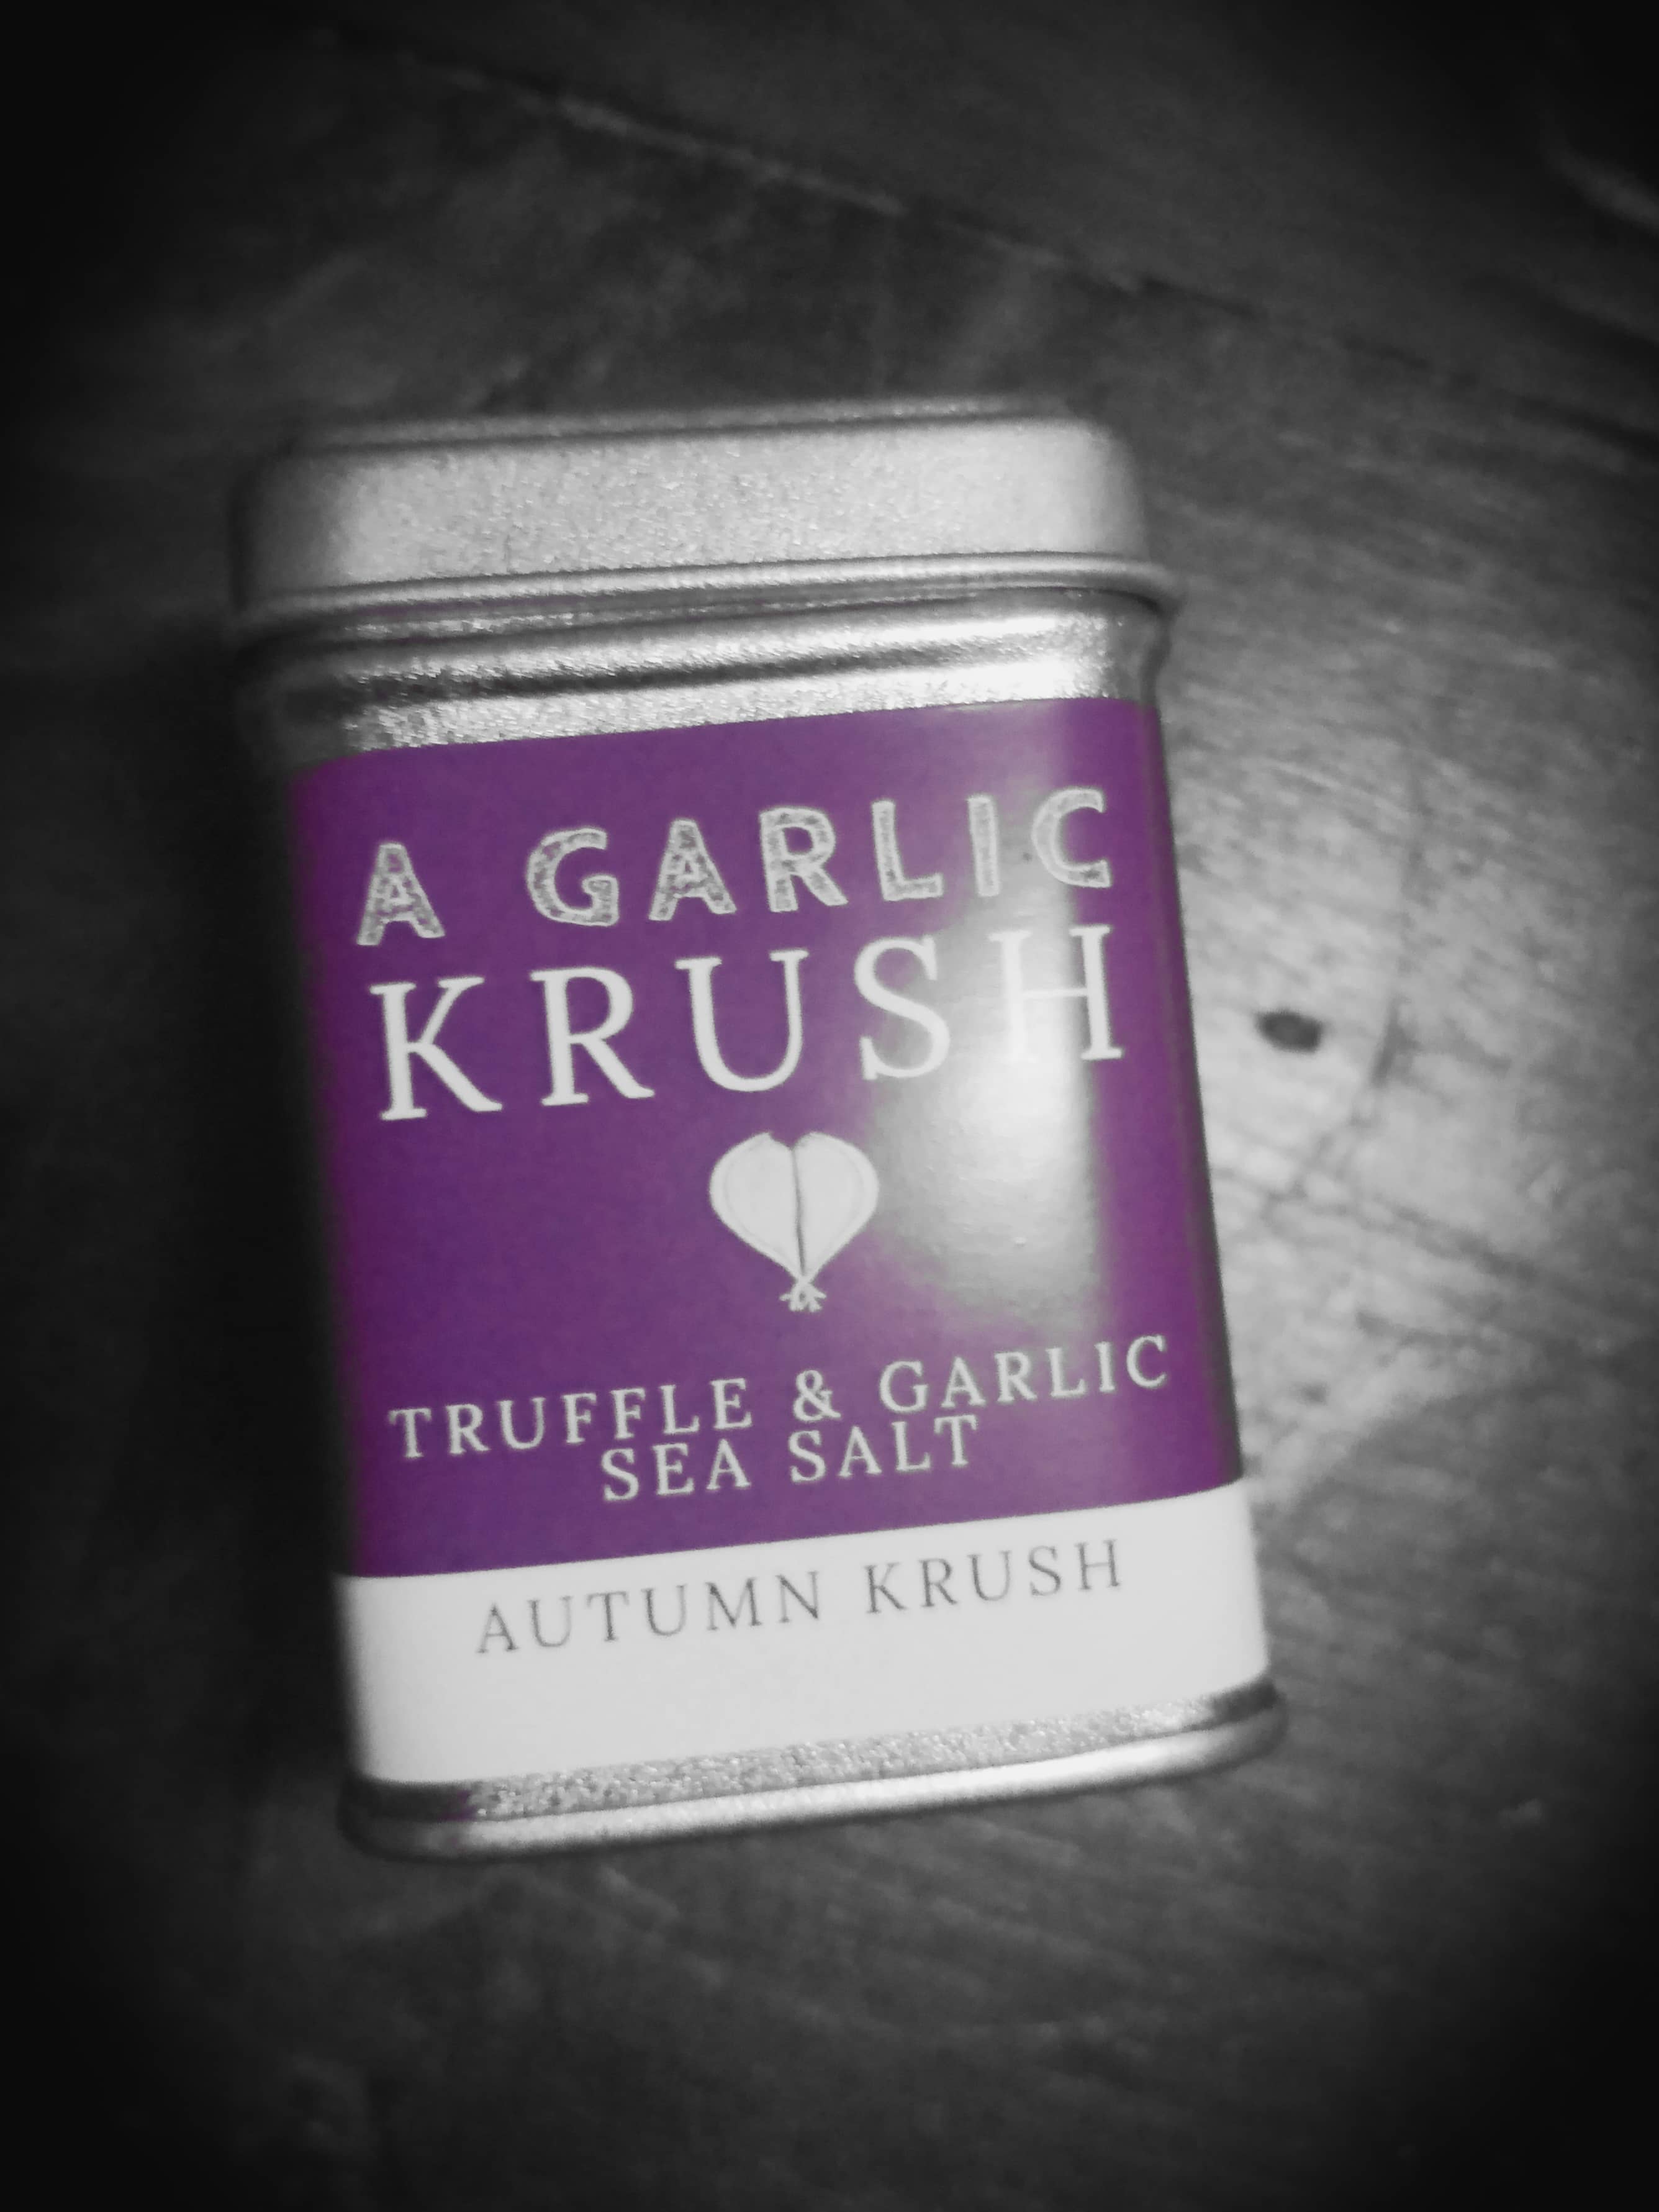 Autumn Krush. Black truffle, garlic and sea salt